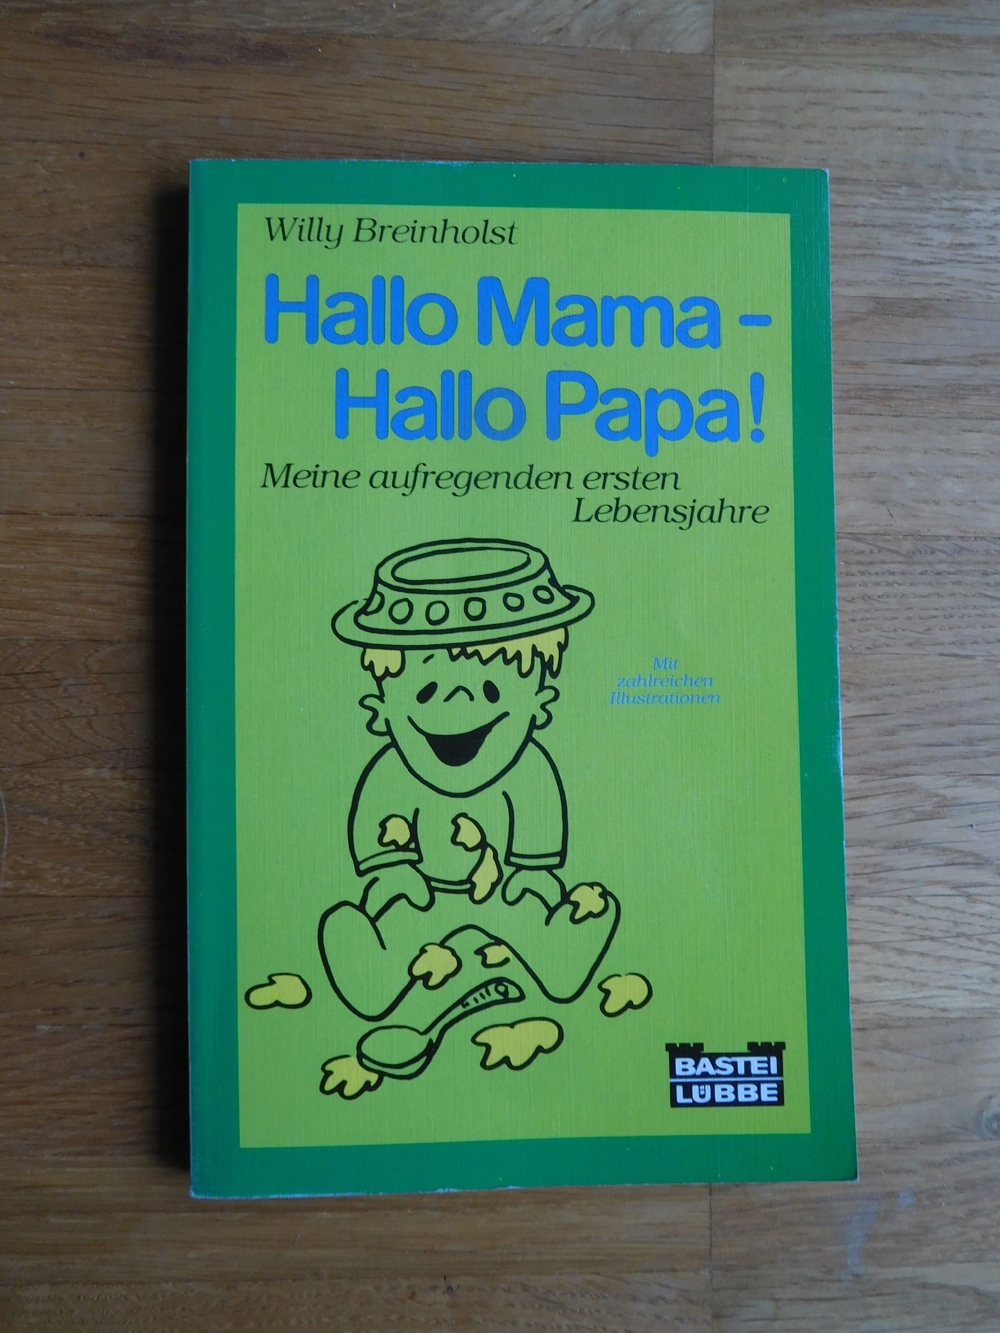 Buch Hallo Mama - Hallo Papa u. Hallo - hier bin ich